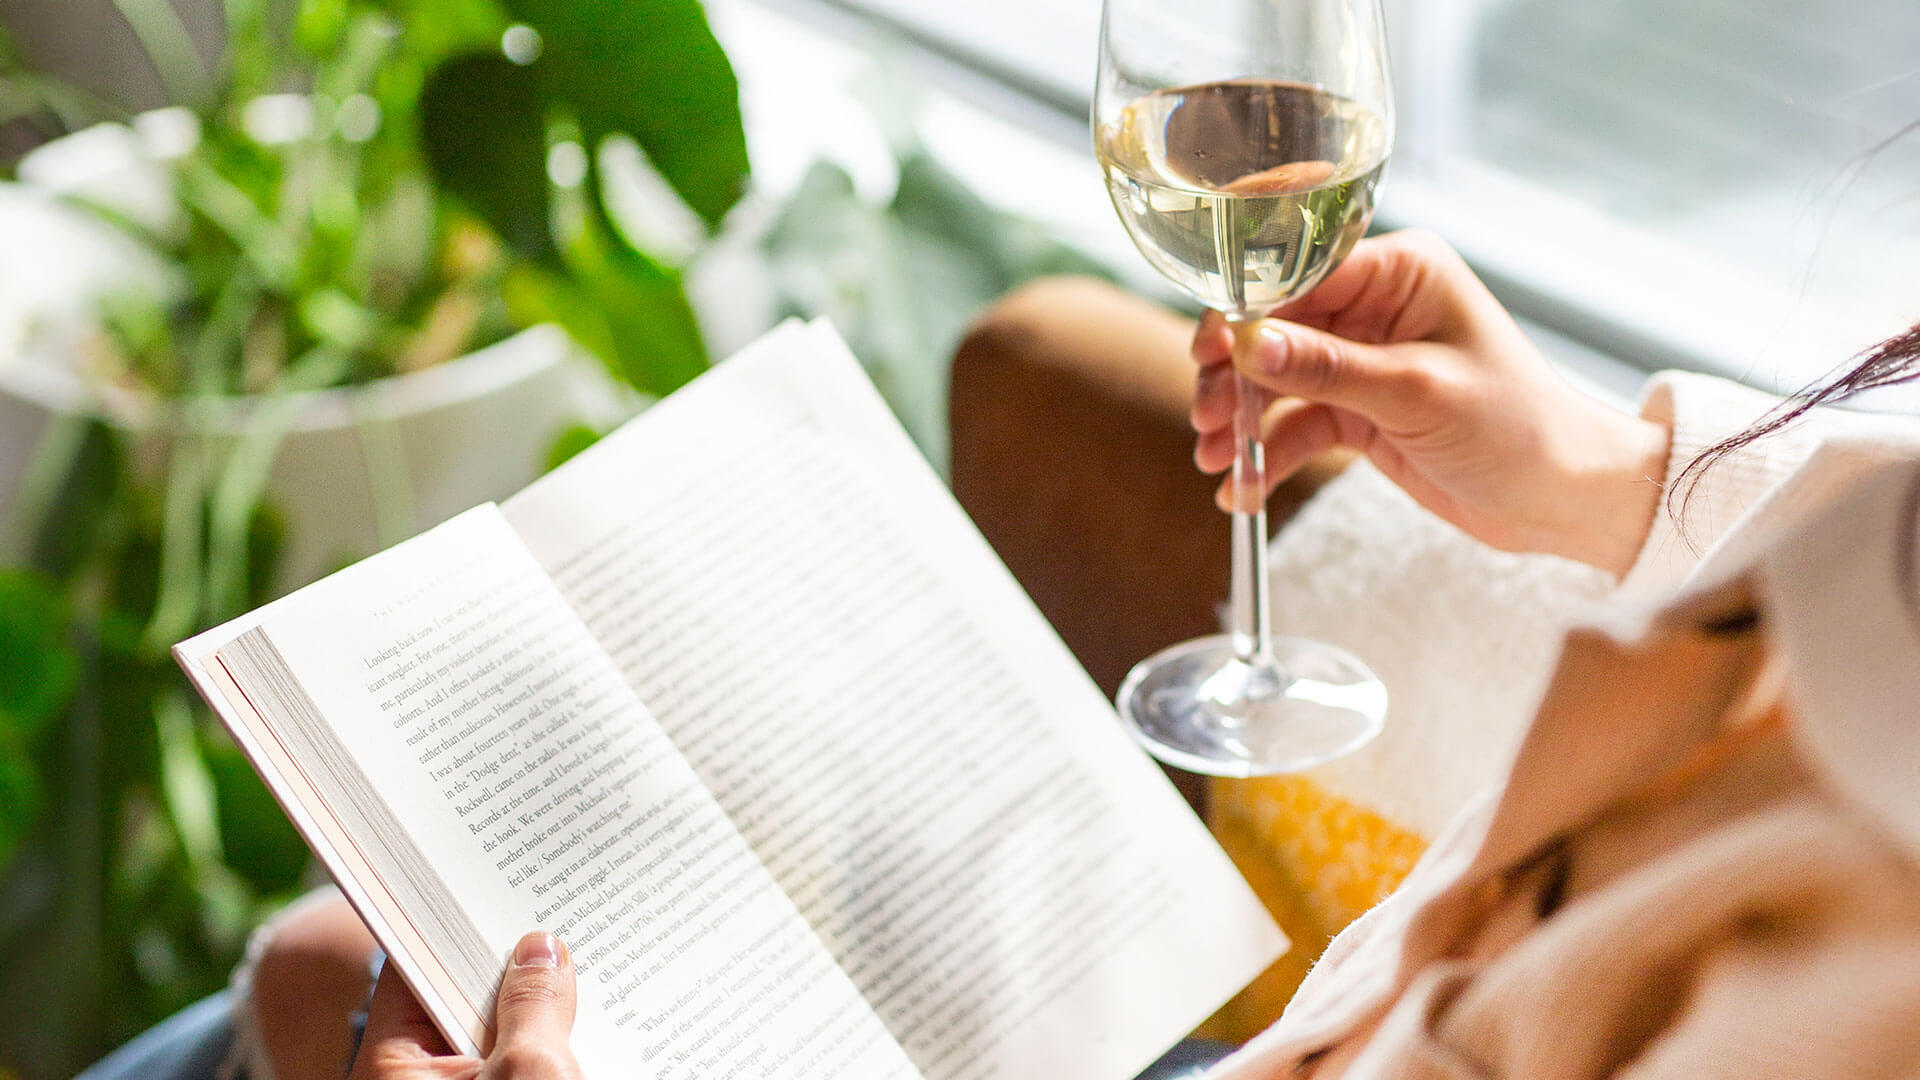 Enjoying a glass of white chardonnay wine while reading inside.